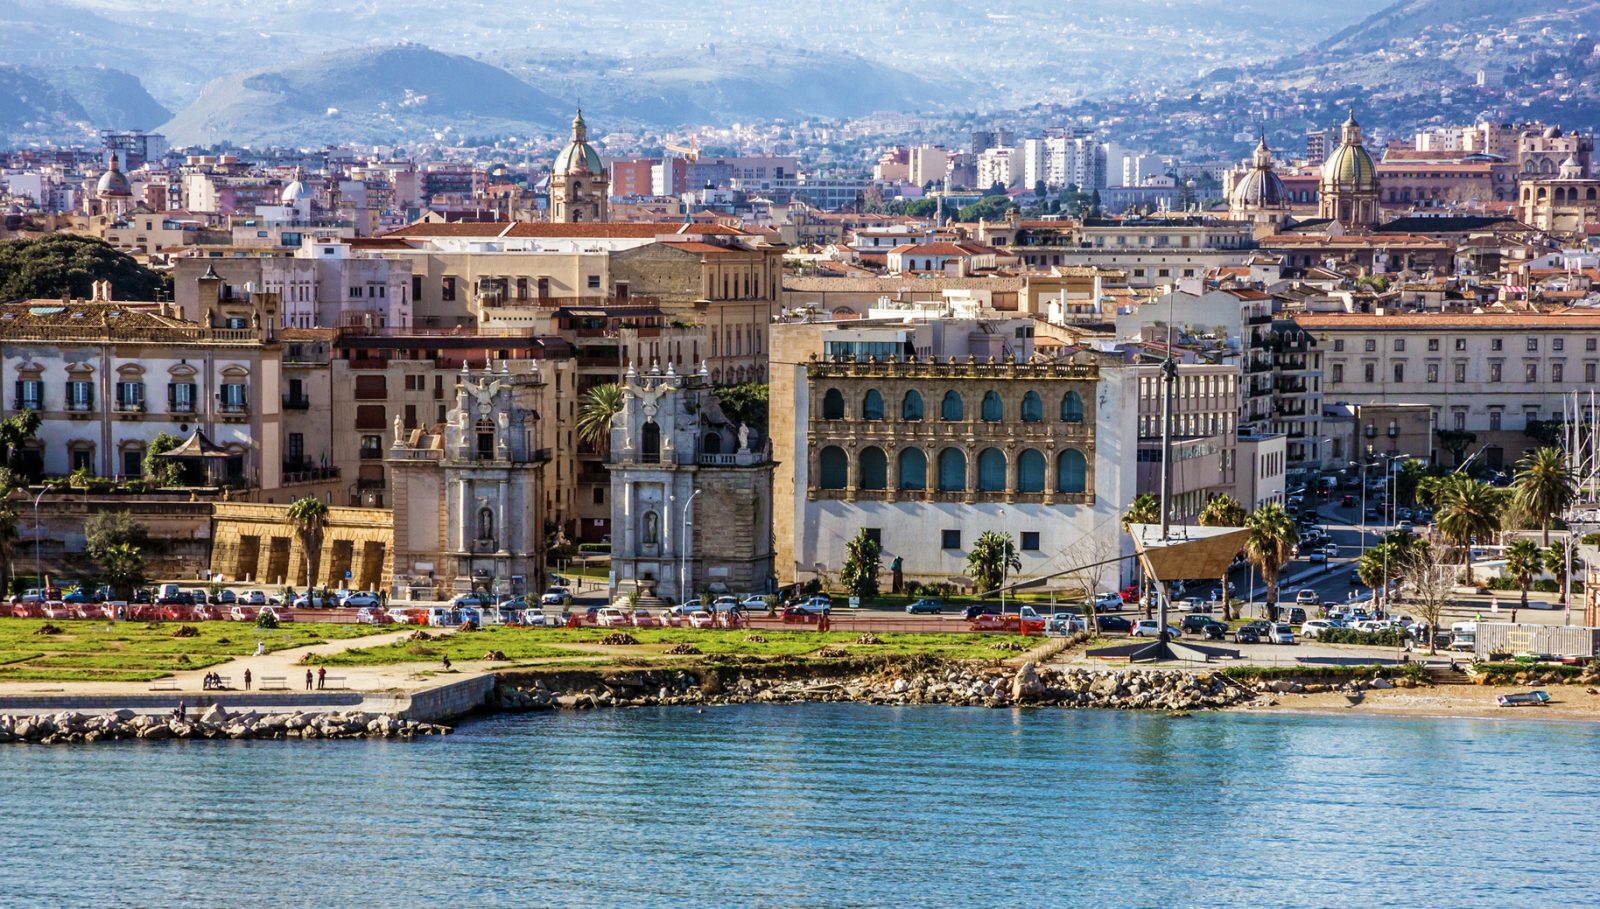 Palermo port the historical city centre and Monreale - Enjoy Tuscany